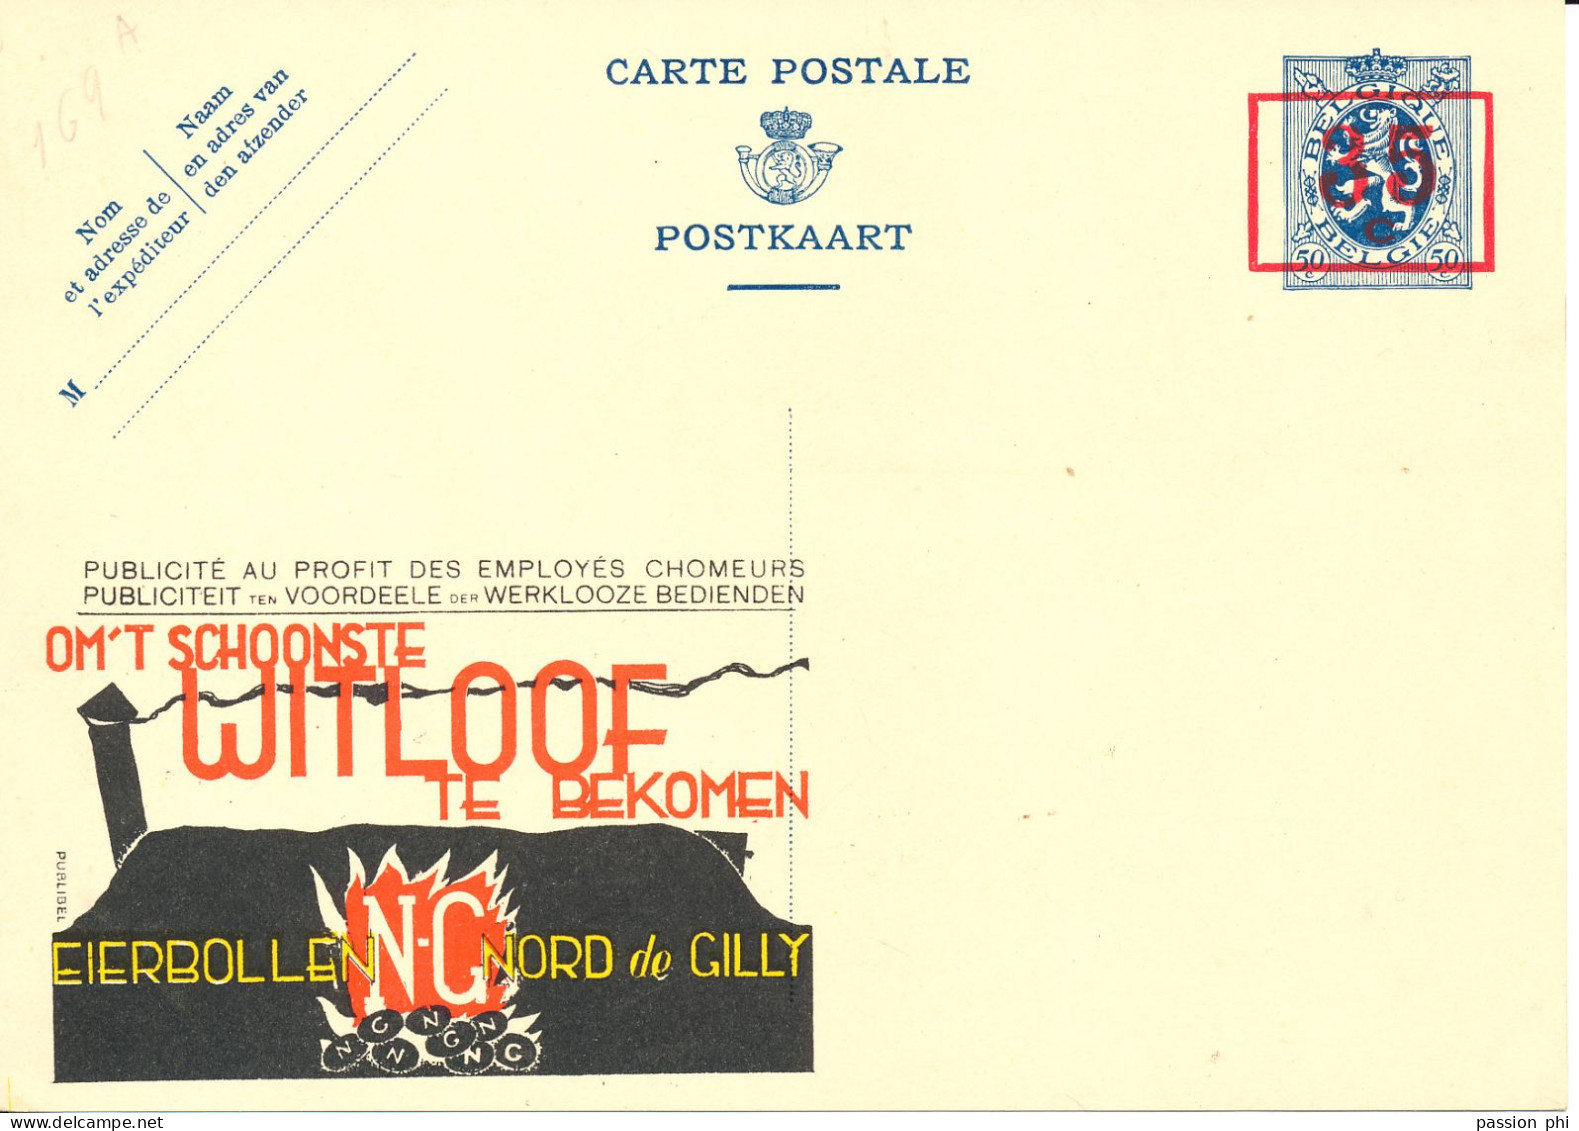 BELGIUM PPS SBEP 4A  "SURCHARGE A LA PEDALE " 35C/50C "169A" WITLOOF UNUSED - Werbepostkarten